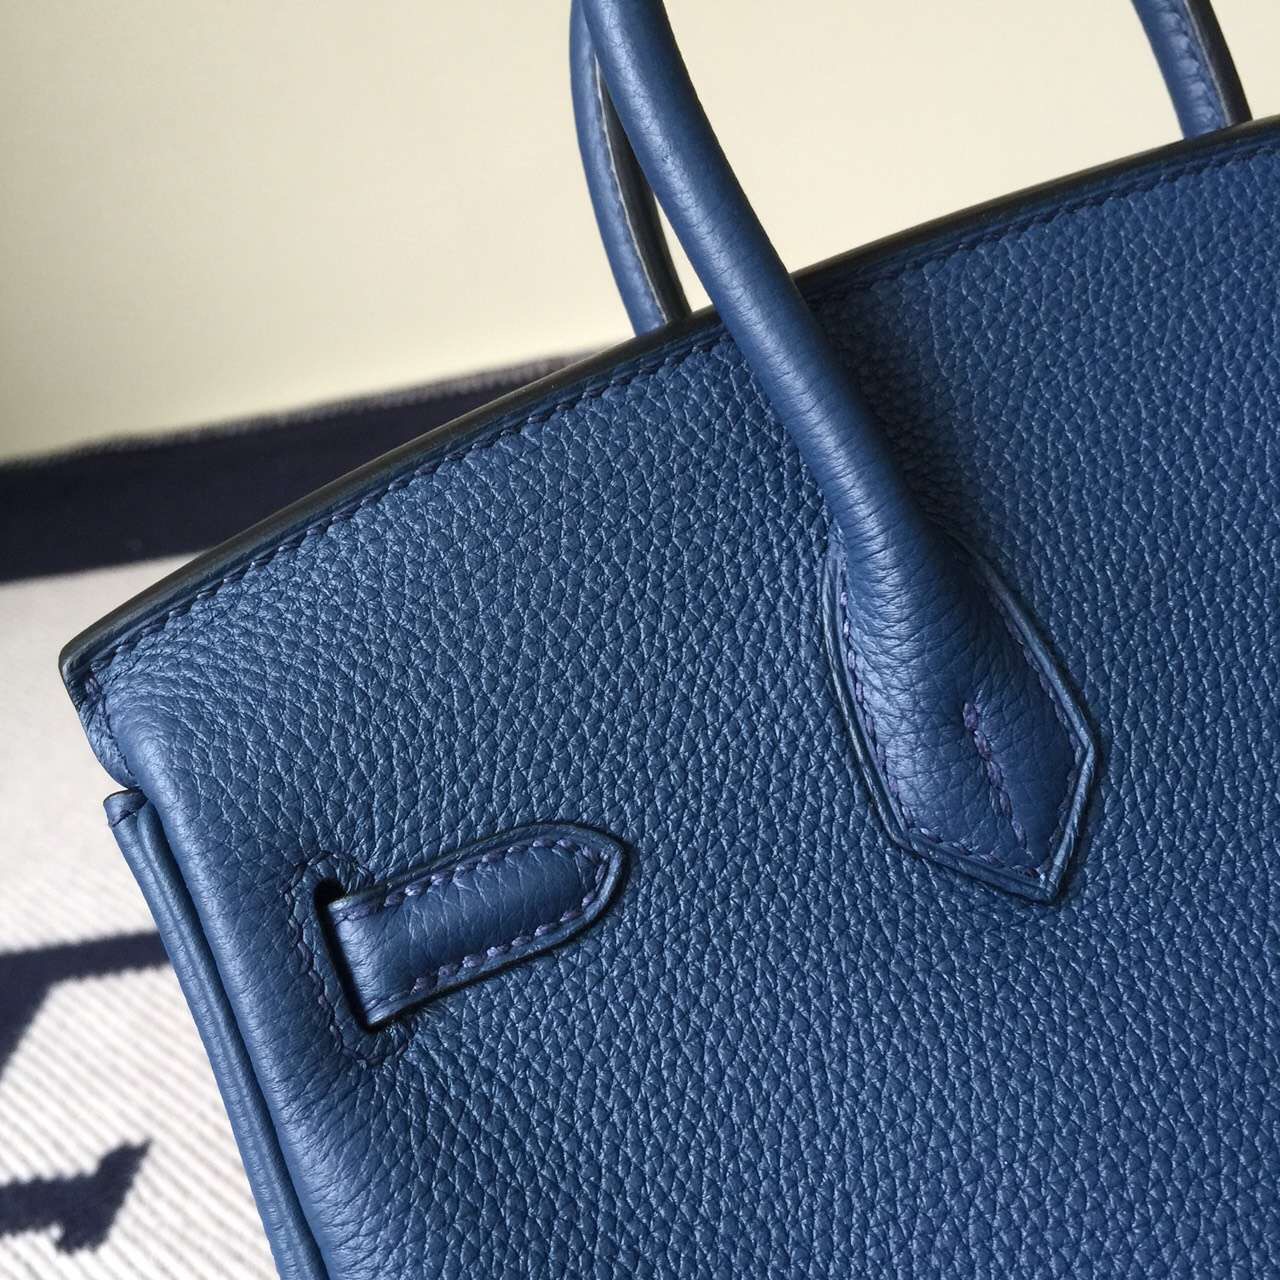 Discount Hermes Togo Calfskin Leather Birkin25cm Bag in Blue Duck